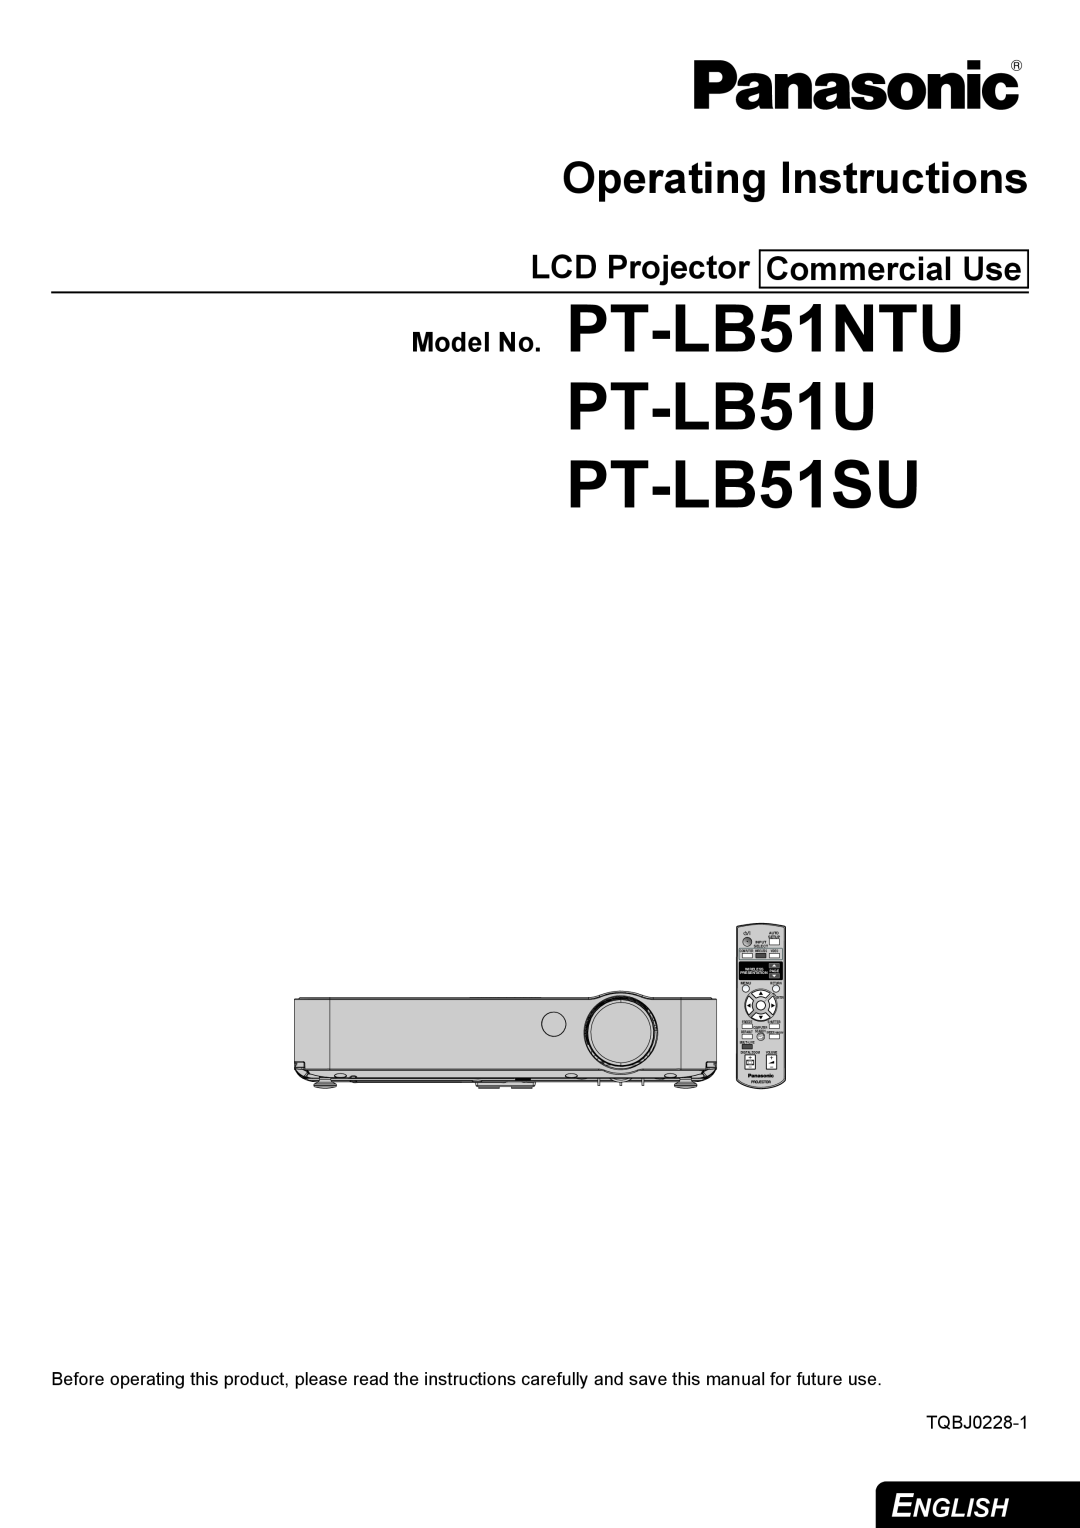 Panasonic PT-LB51NTU operating instructions LCD Projector Commercial Use, PT-LB51U PT-LB51SU, Operating Instructions 